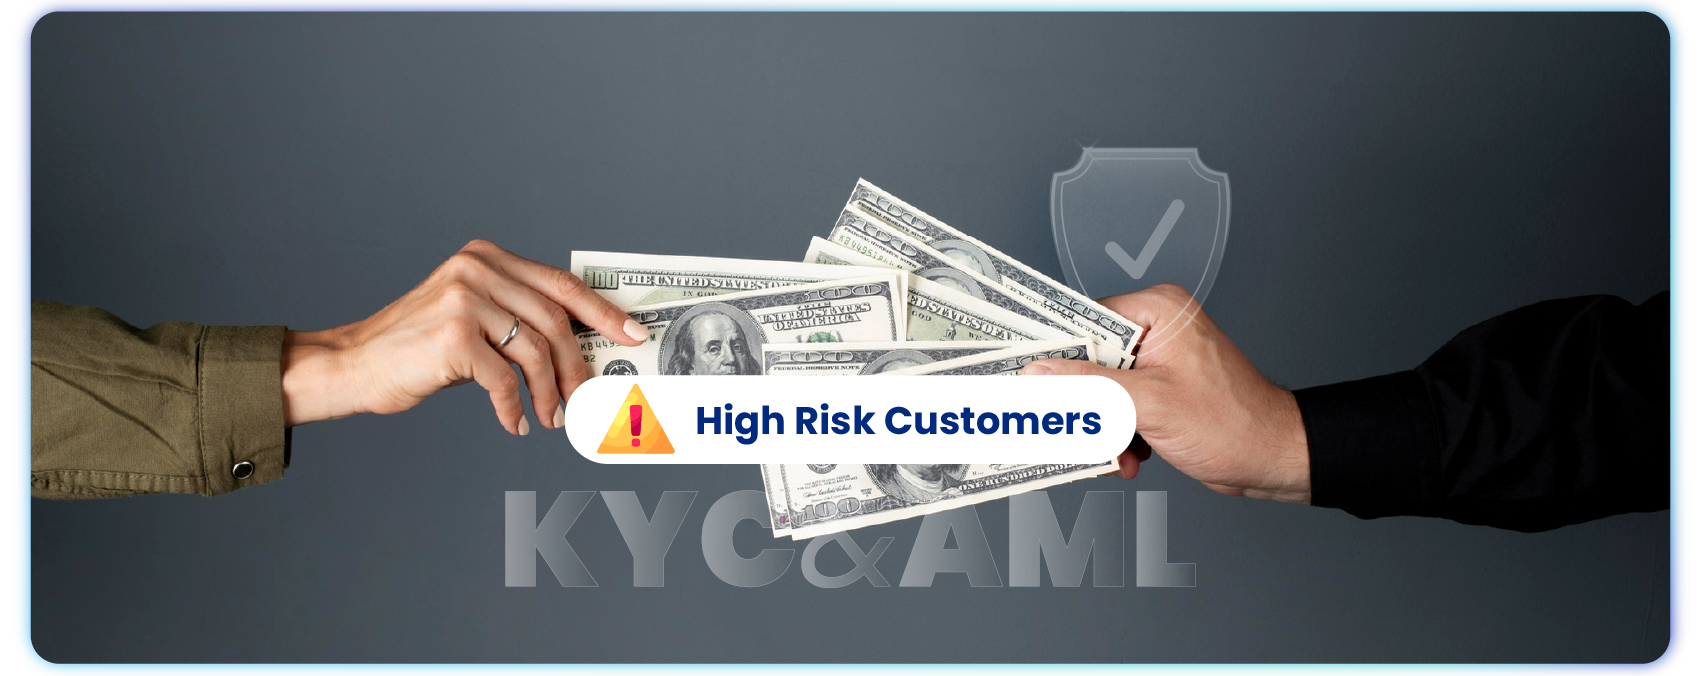 High Risk Customers